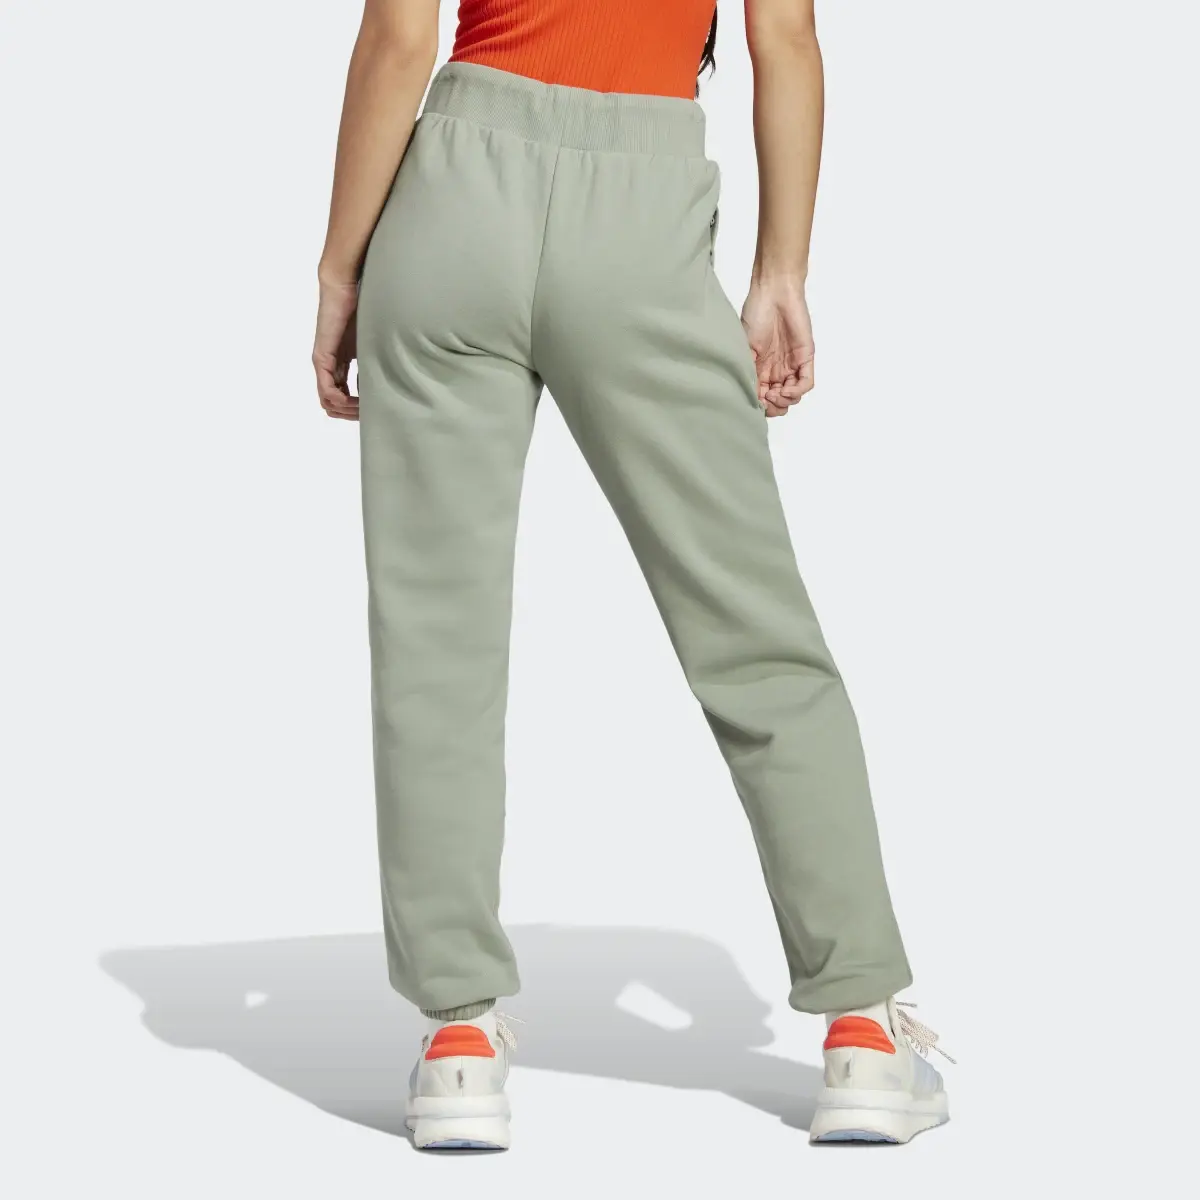 Adidas City Escape Regular-Fit Pants. 2